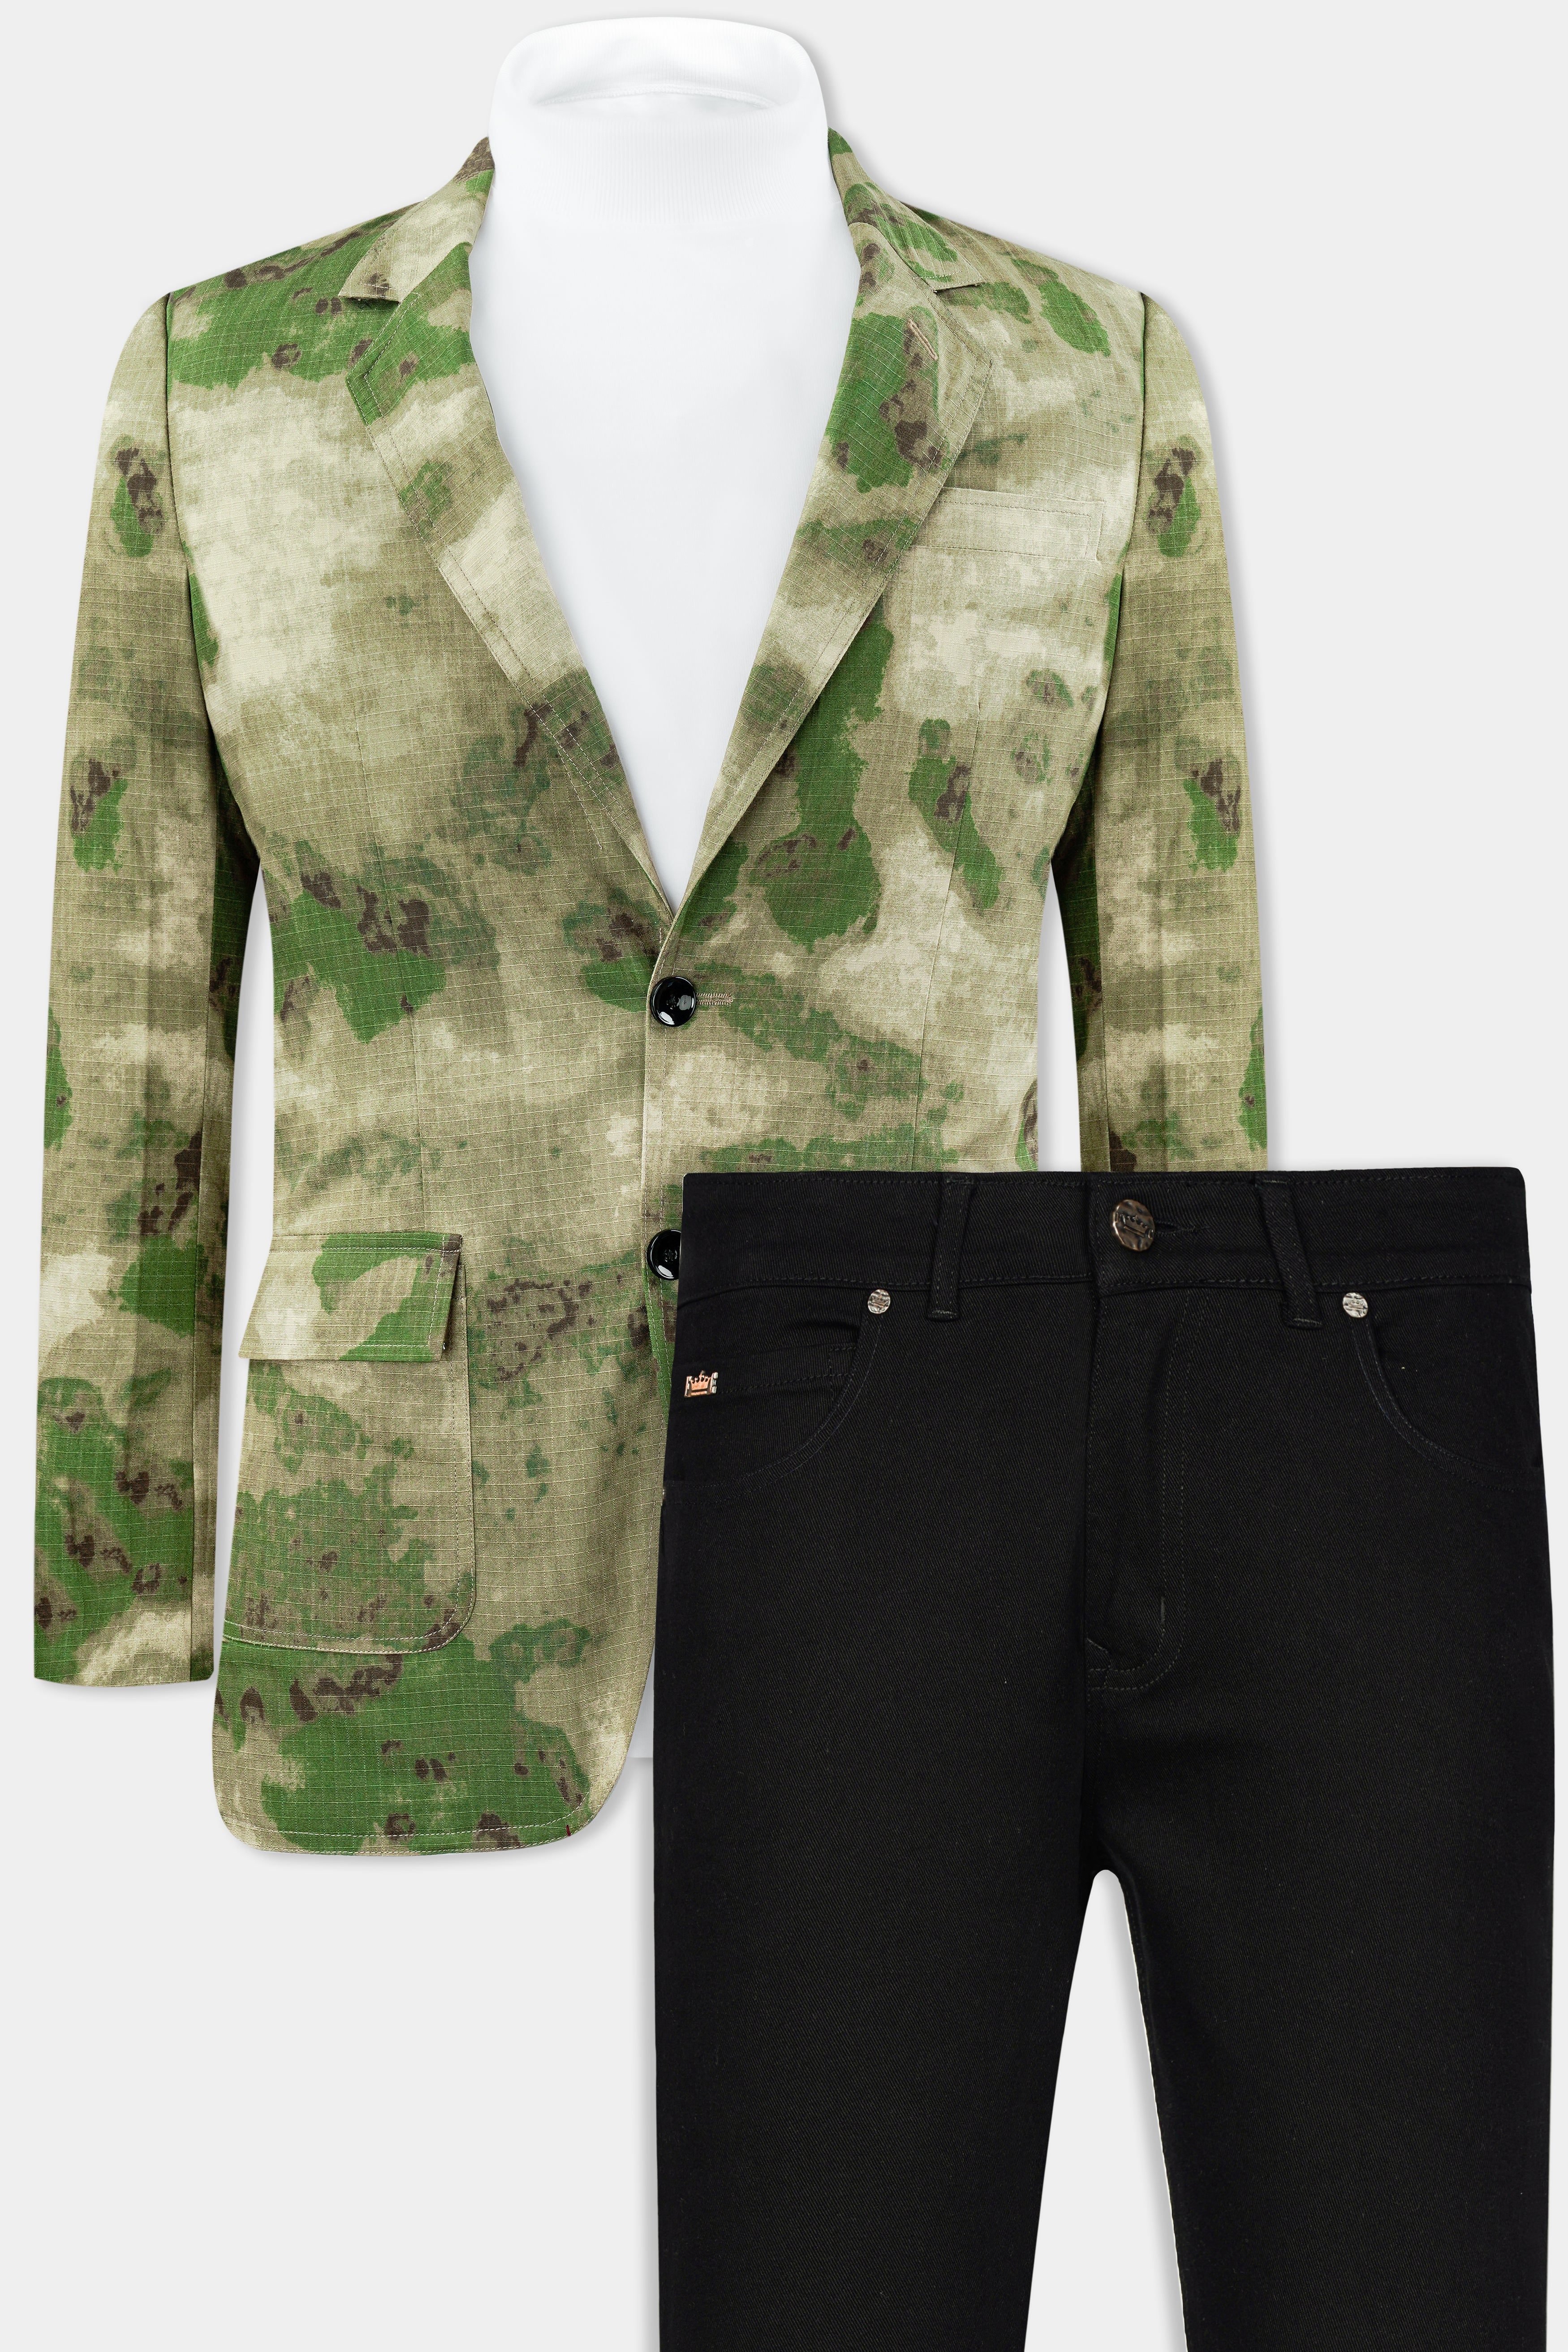 Kelp Green and Fern Green Tie Dye Printed Premium Cotton Blazer With Jade Black Jeans